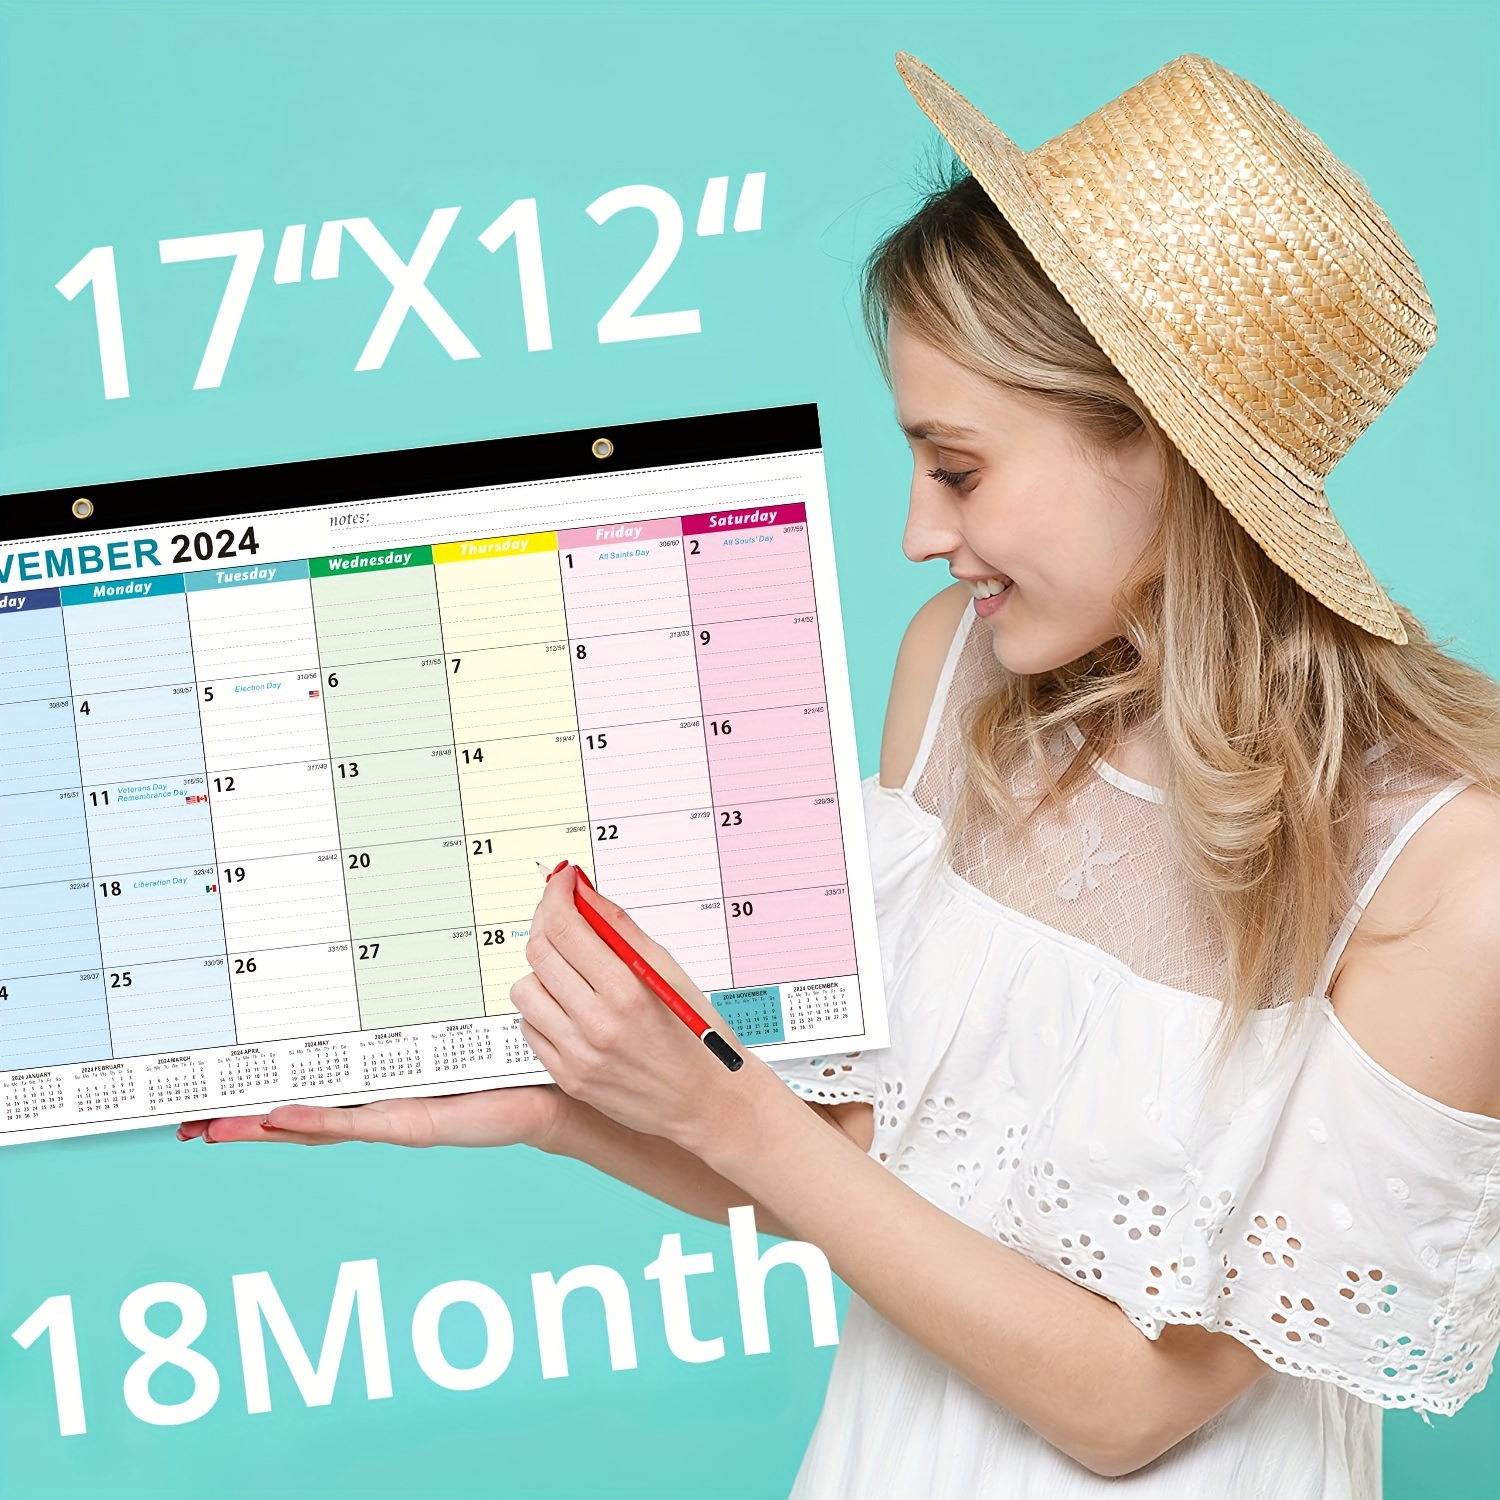 Calendario da scrivania 2024, in piedi, calendario da tavolo 2024, calendario  da 18 mesi da luglio